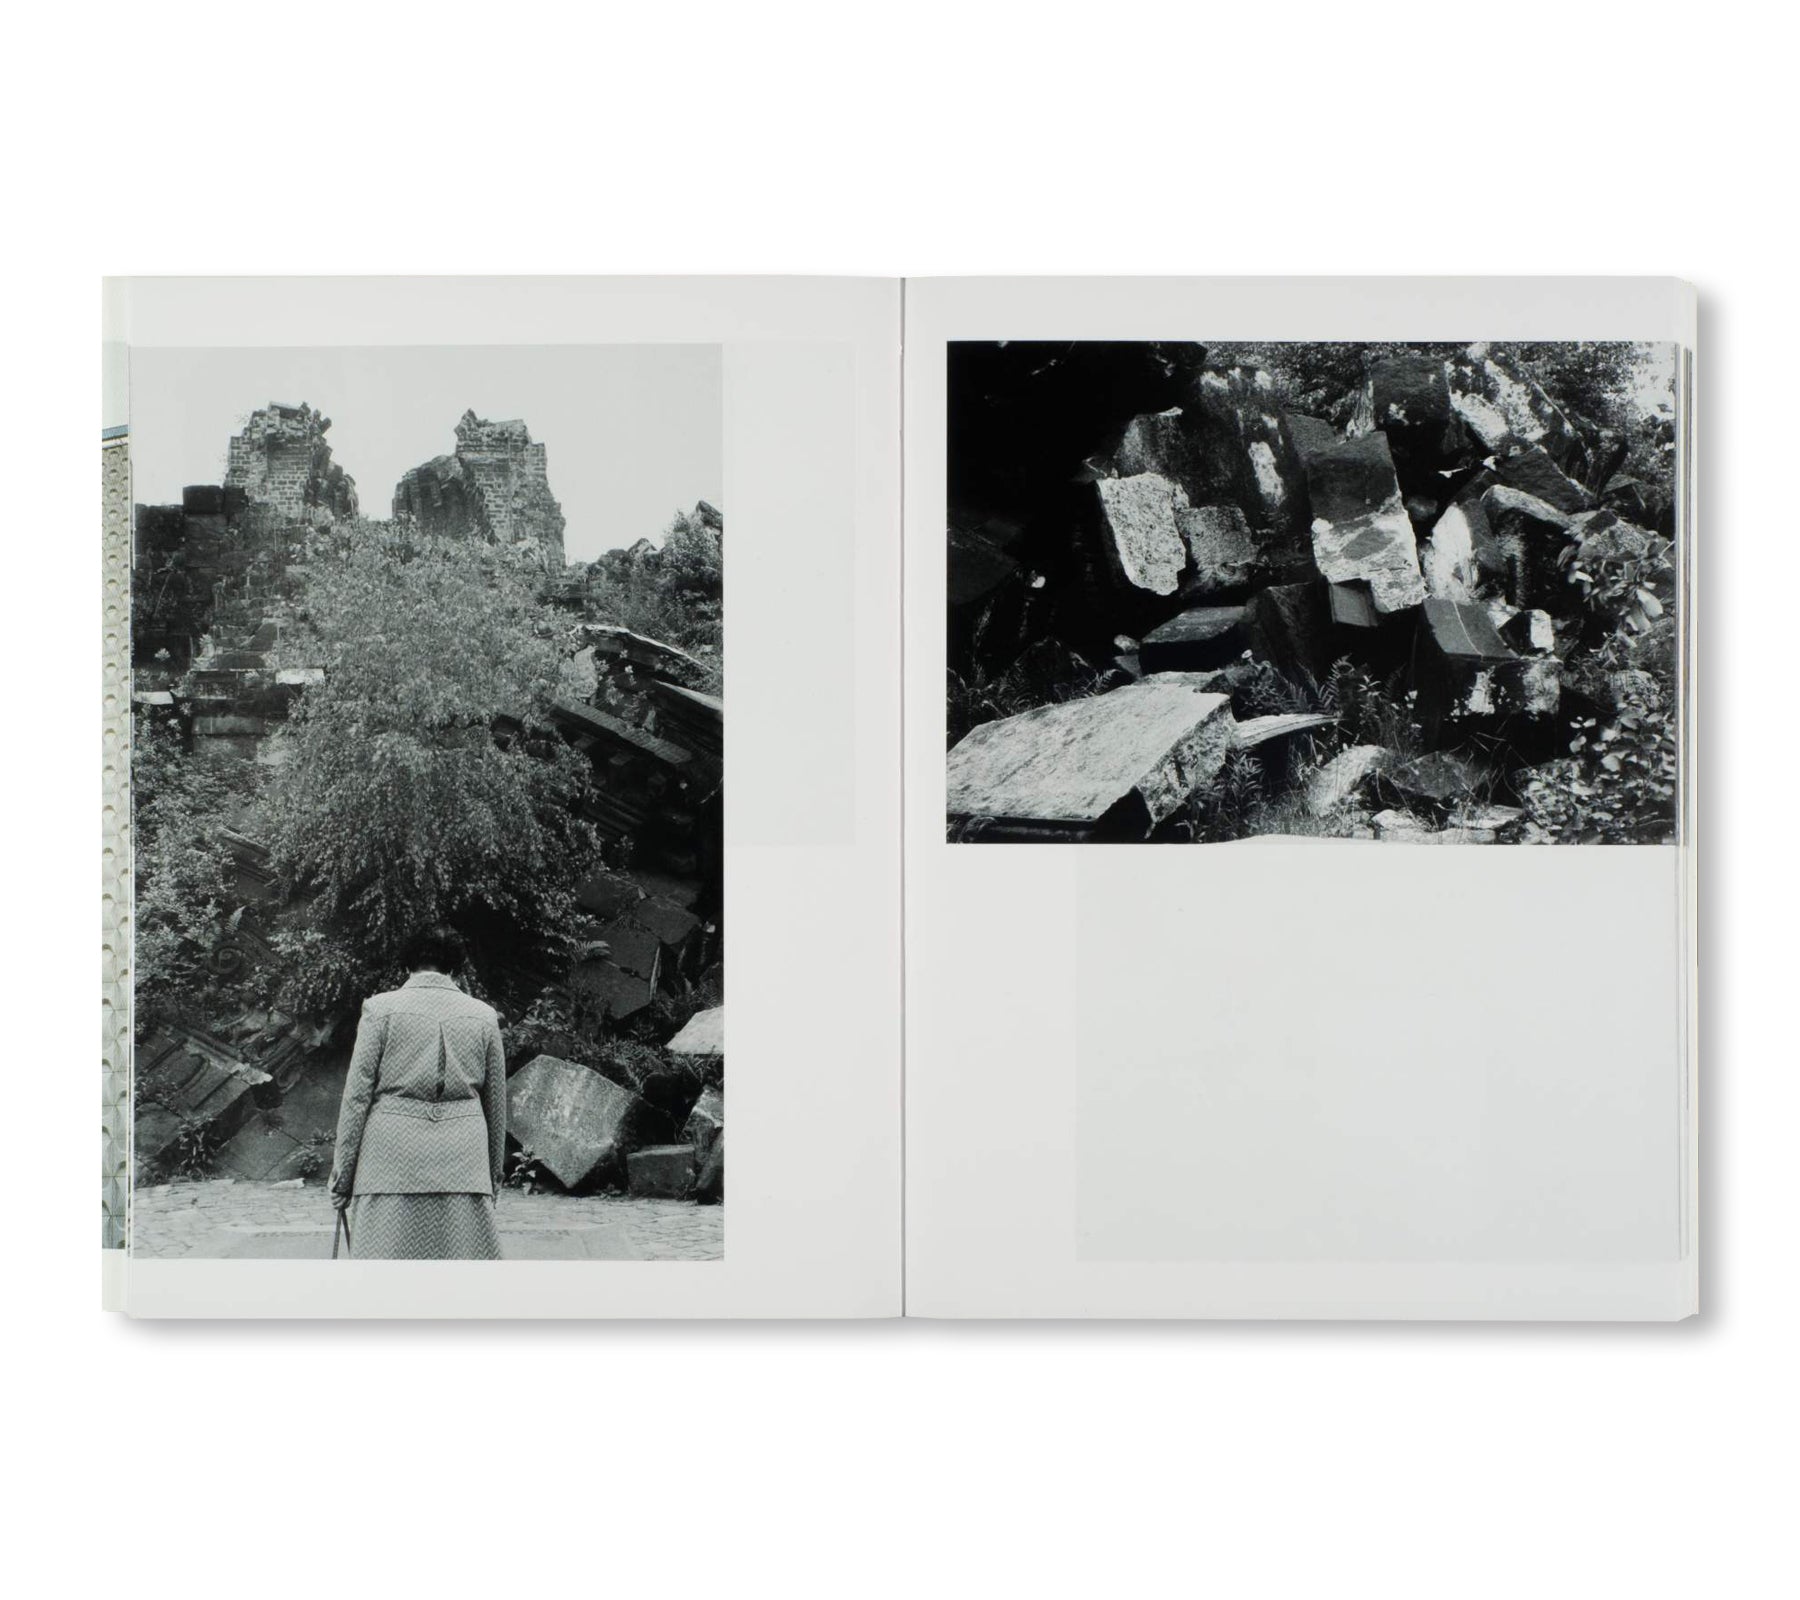 WHY DRESDEN - PHOTOGRAPHS 1984/85 & 2015 by Seiichi Furuya